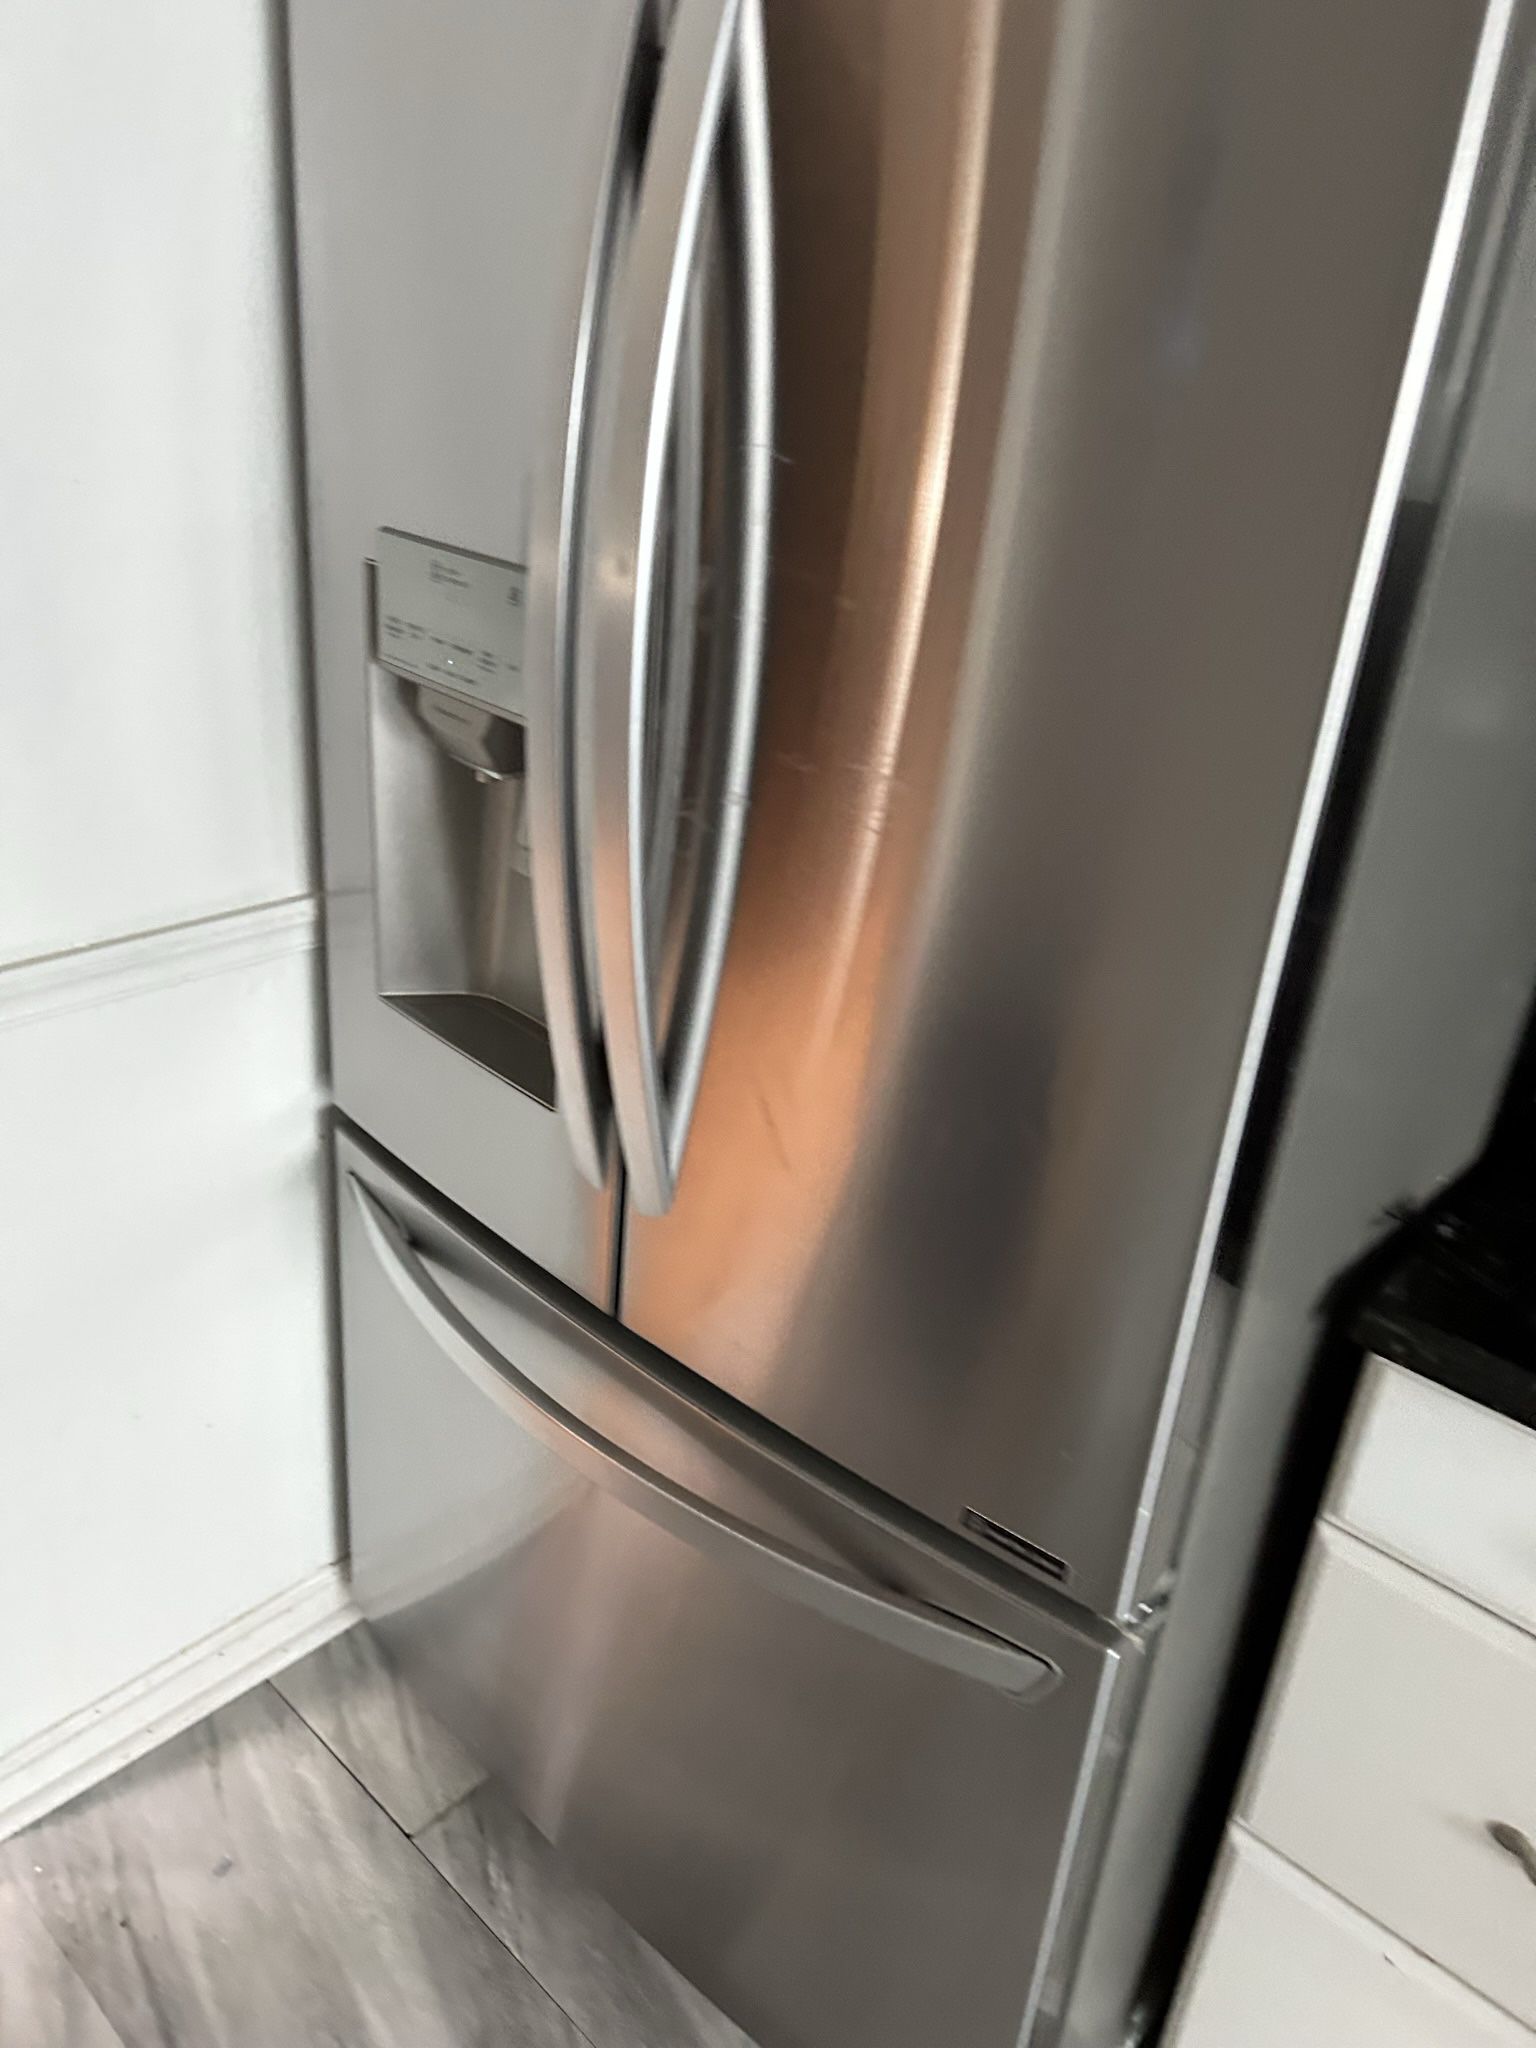 LG 26.3 Side By Side Refrigerator 